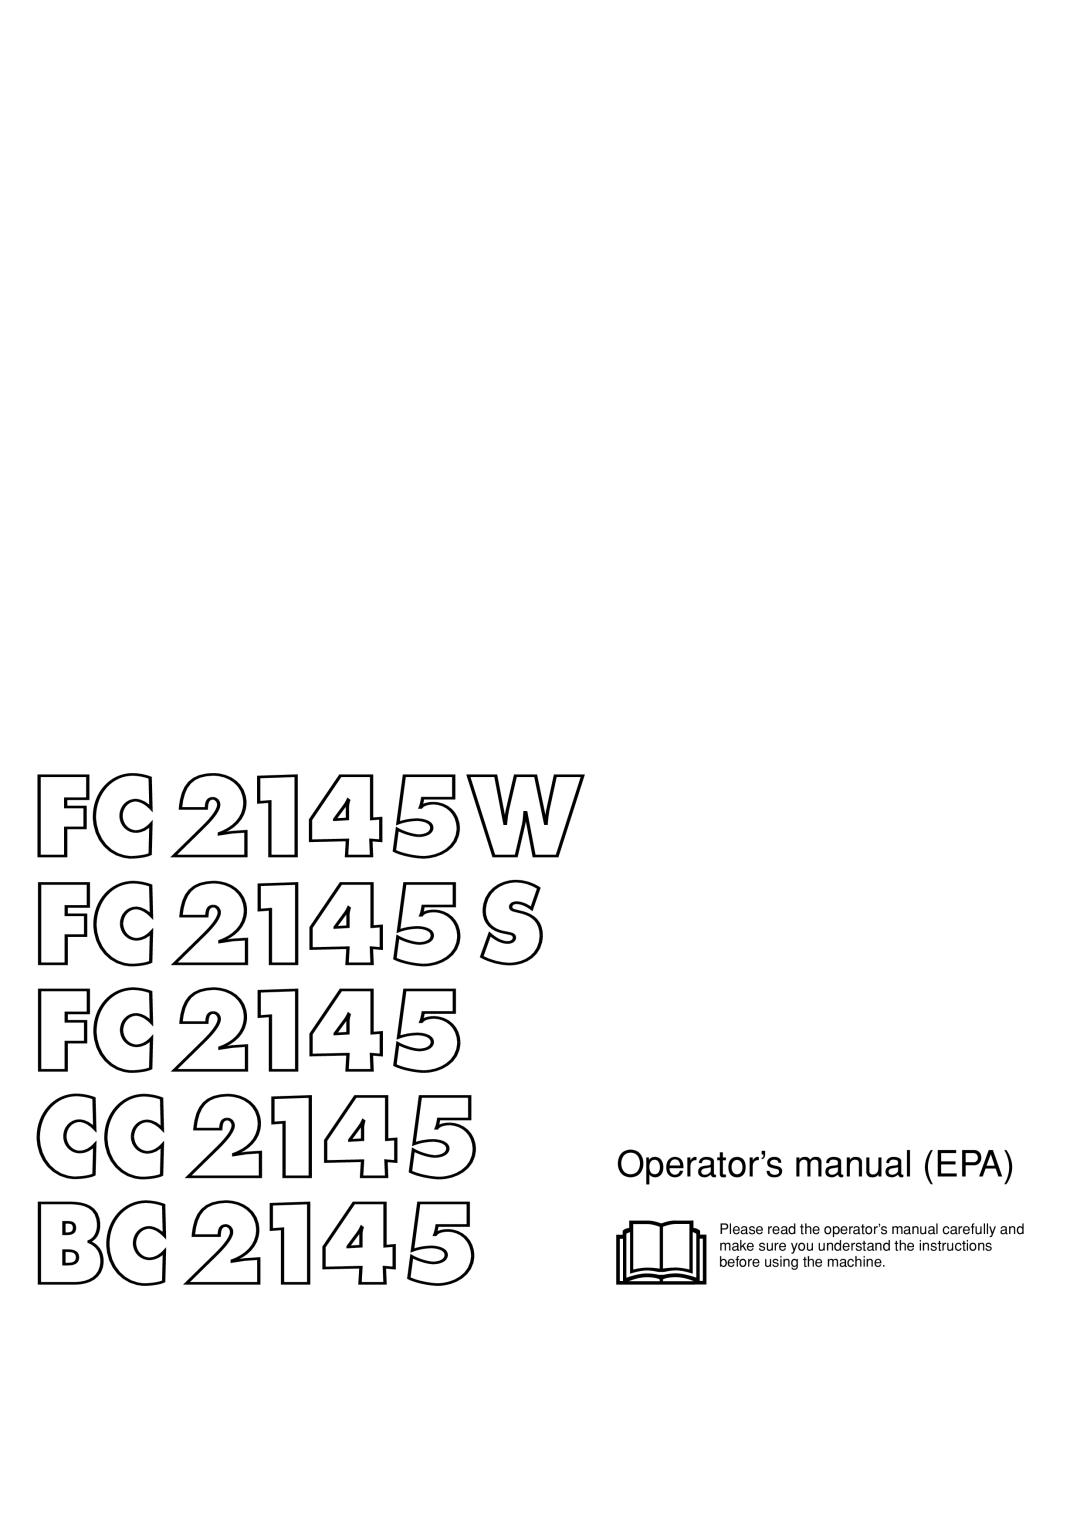 Jonsered CC 2145 manual Operator’s manual EPA 